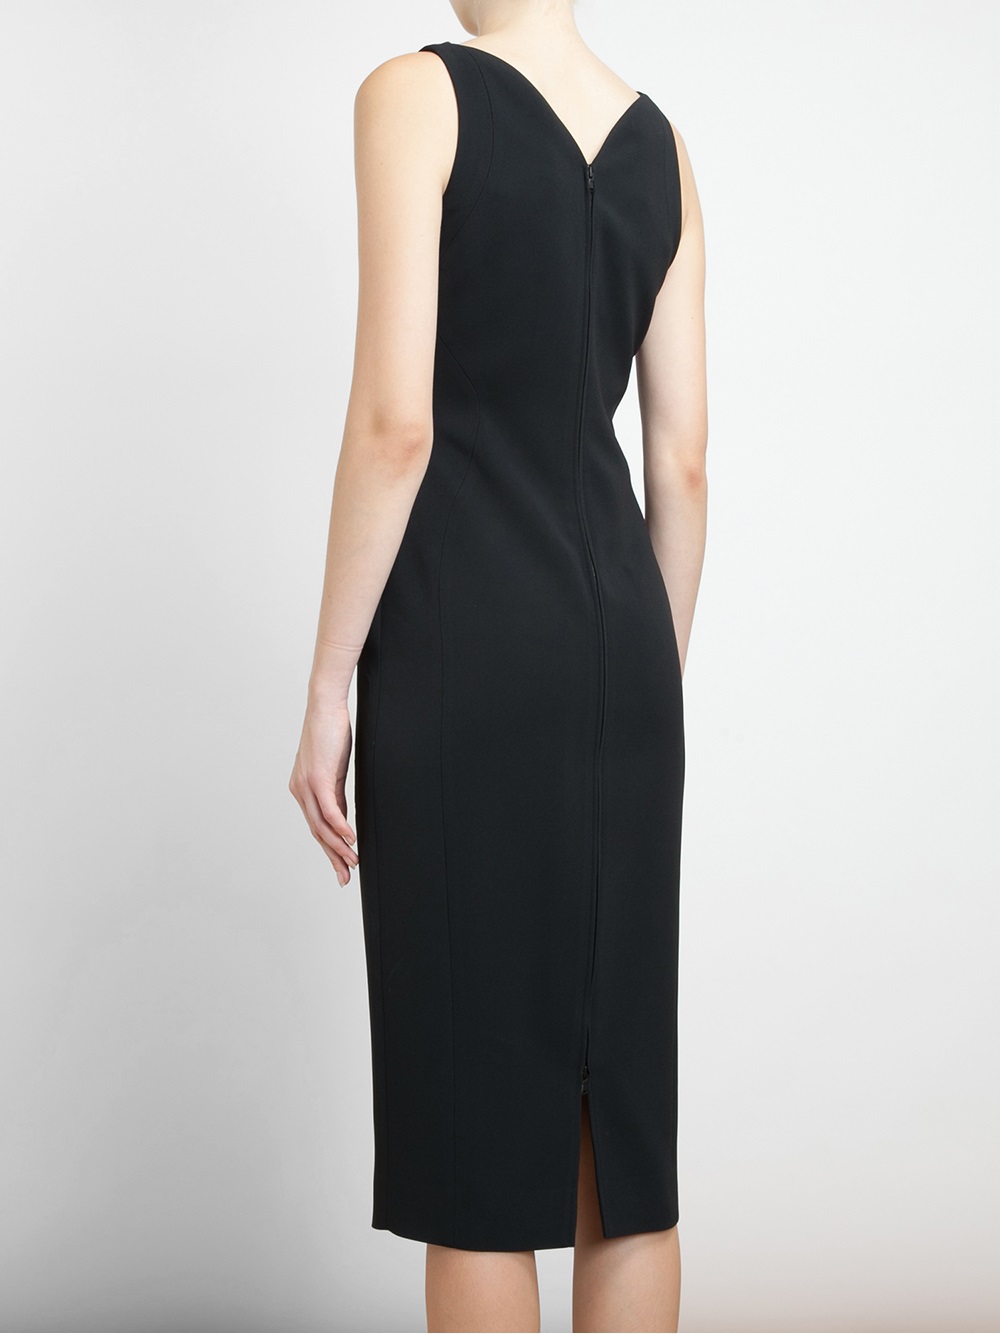 Antonio Berardi Geometric Jacquard Woolblend Dress in Black (Metallic ...